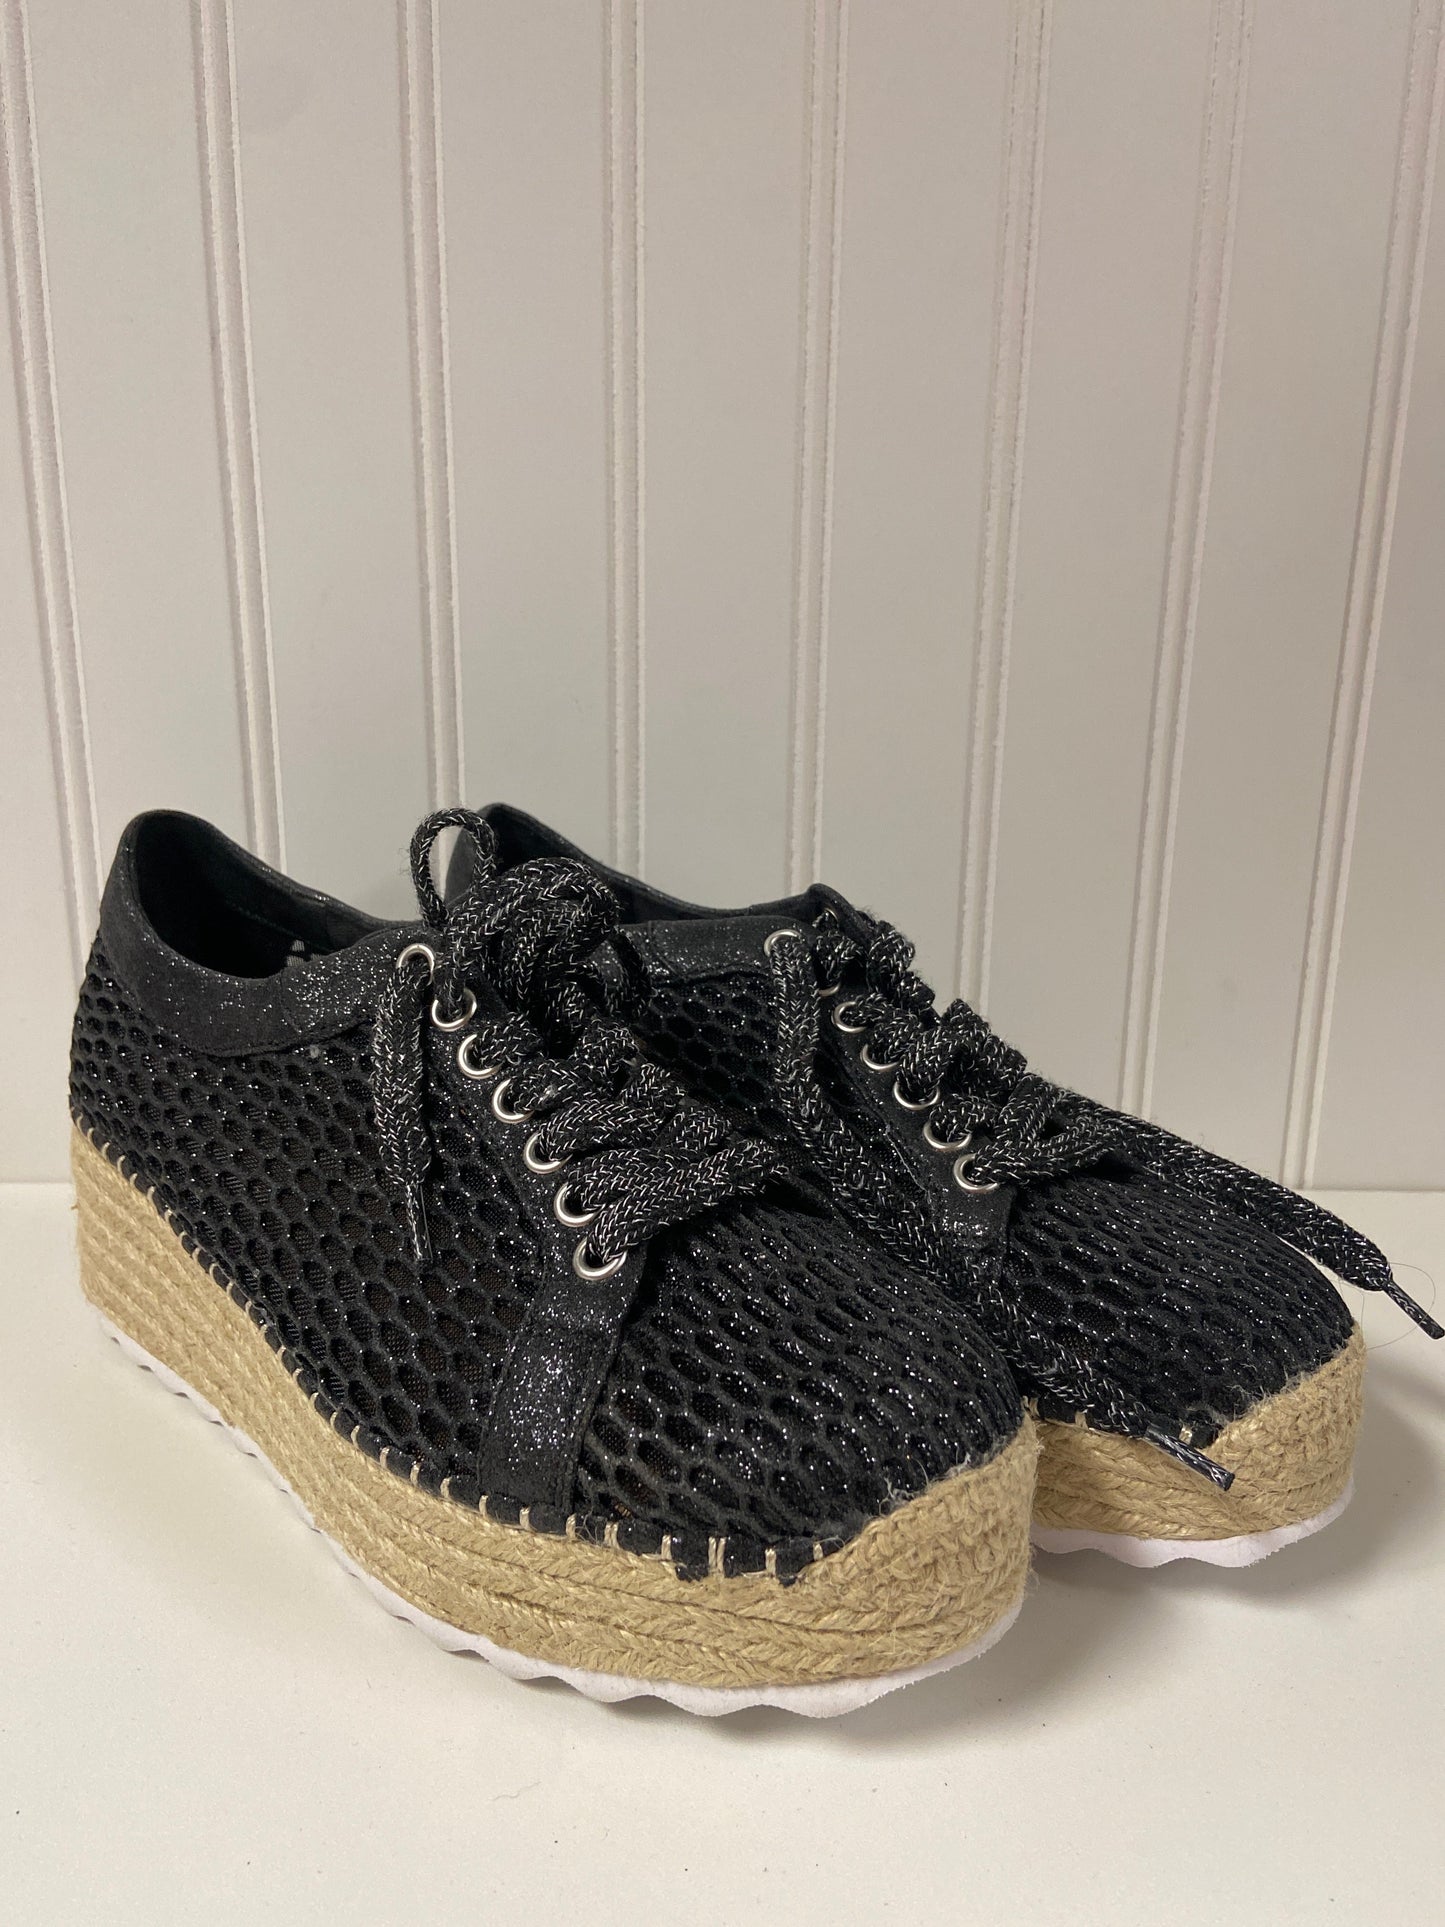 Black Shoes Heels Platform Inc, Size 7.5